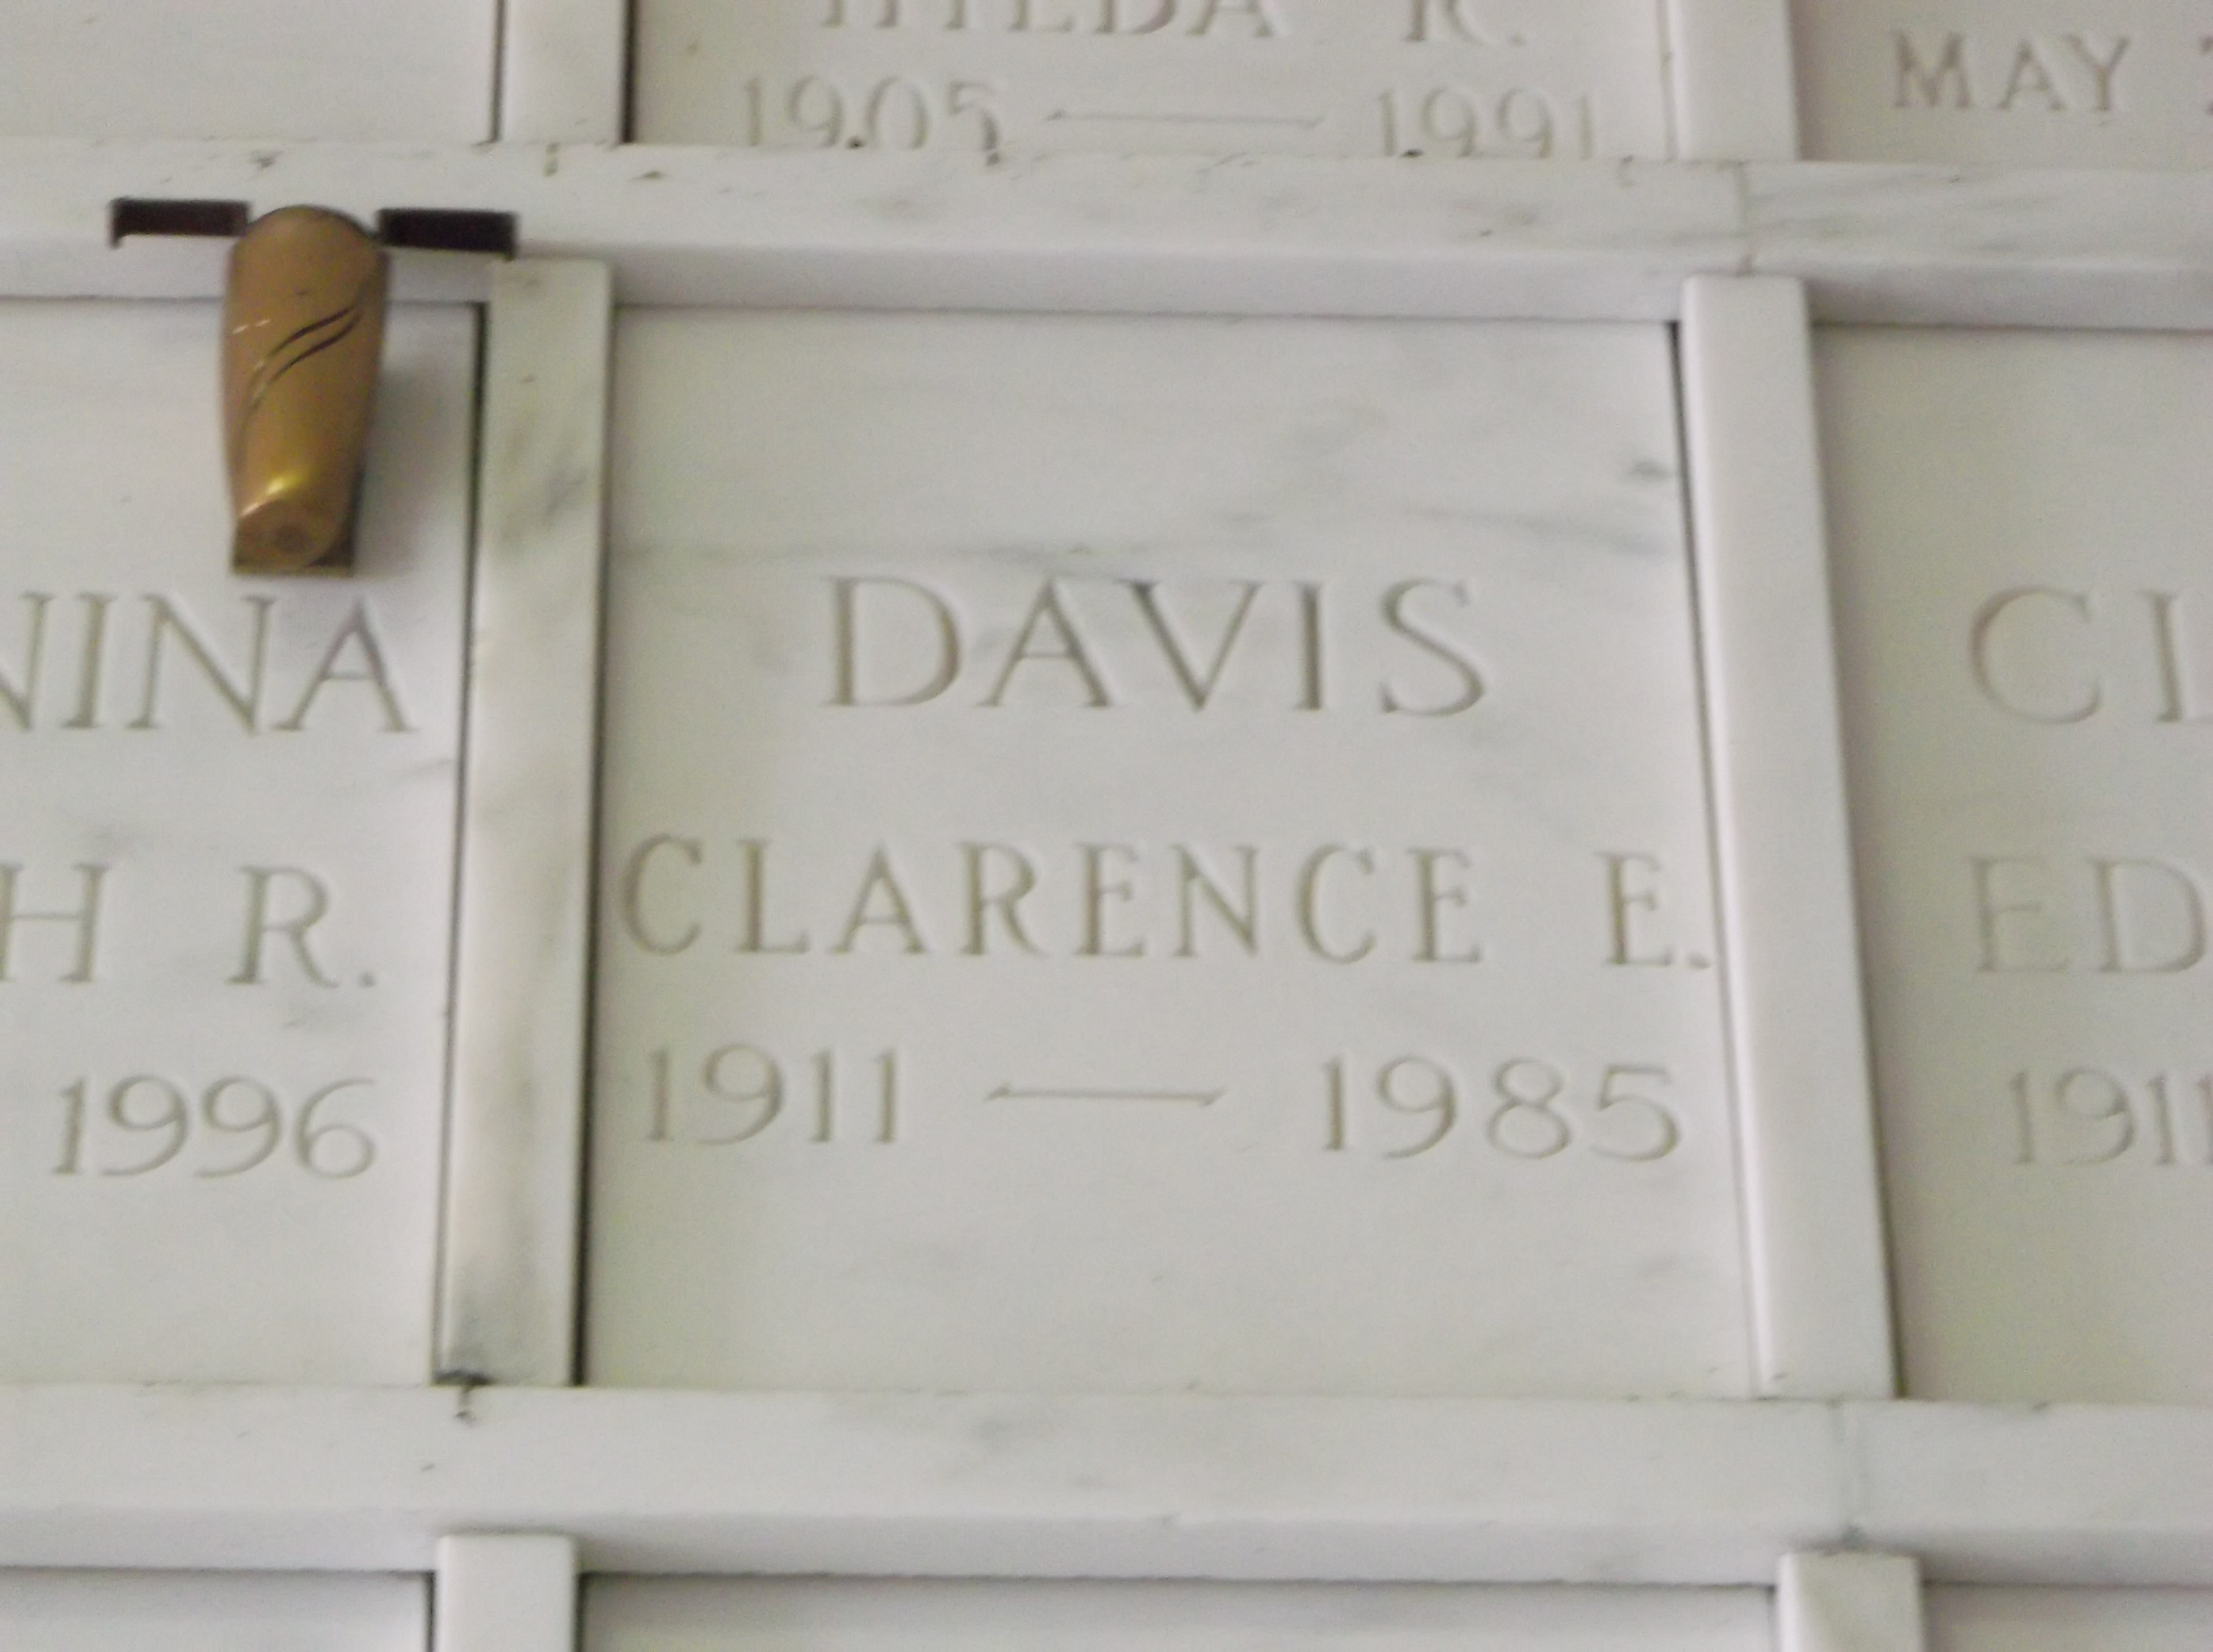 Clarence E Davis